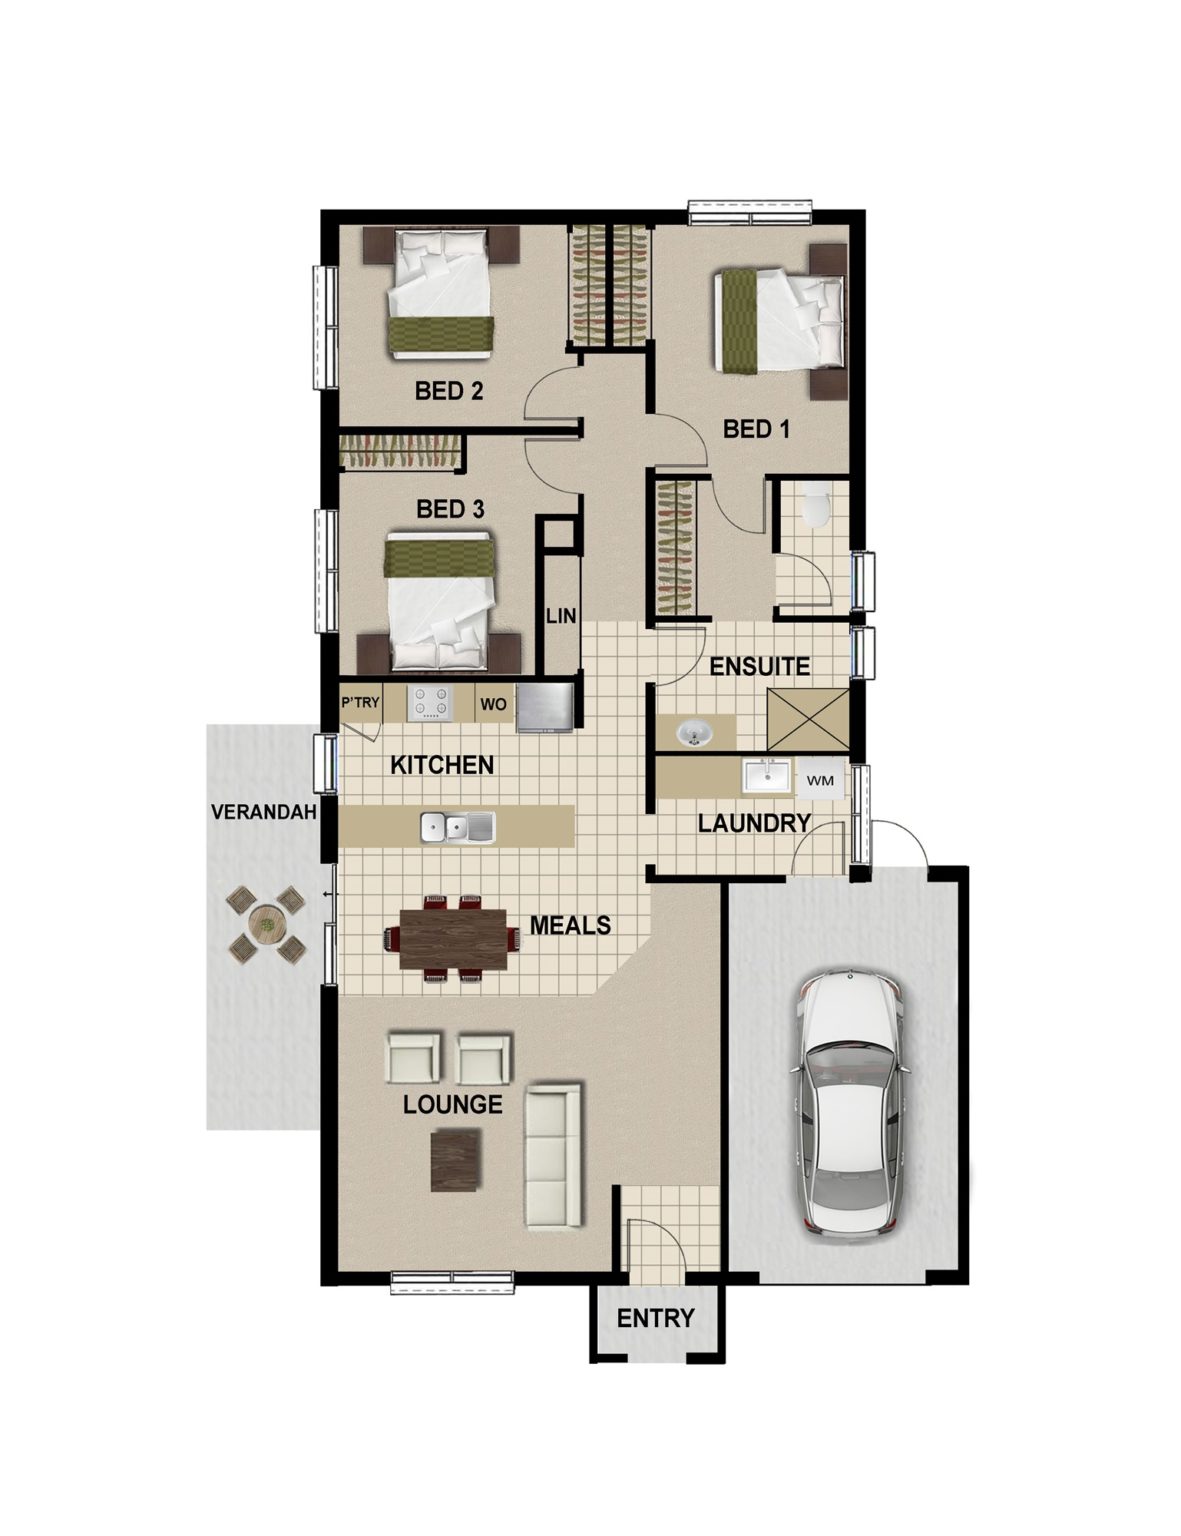 agent202_residential_floorplan_185883.jpg